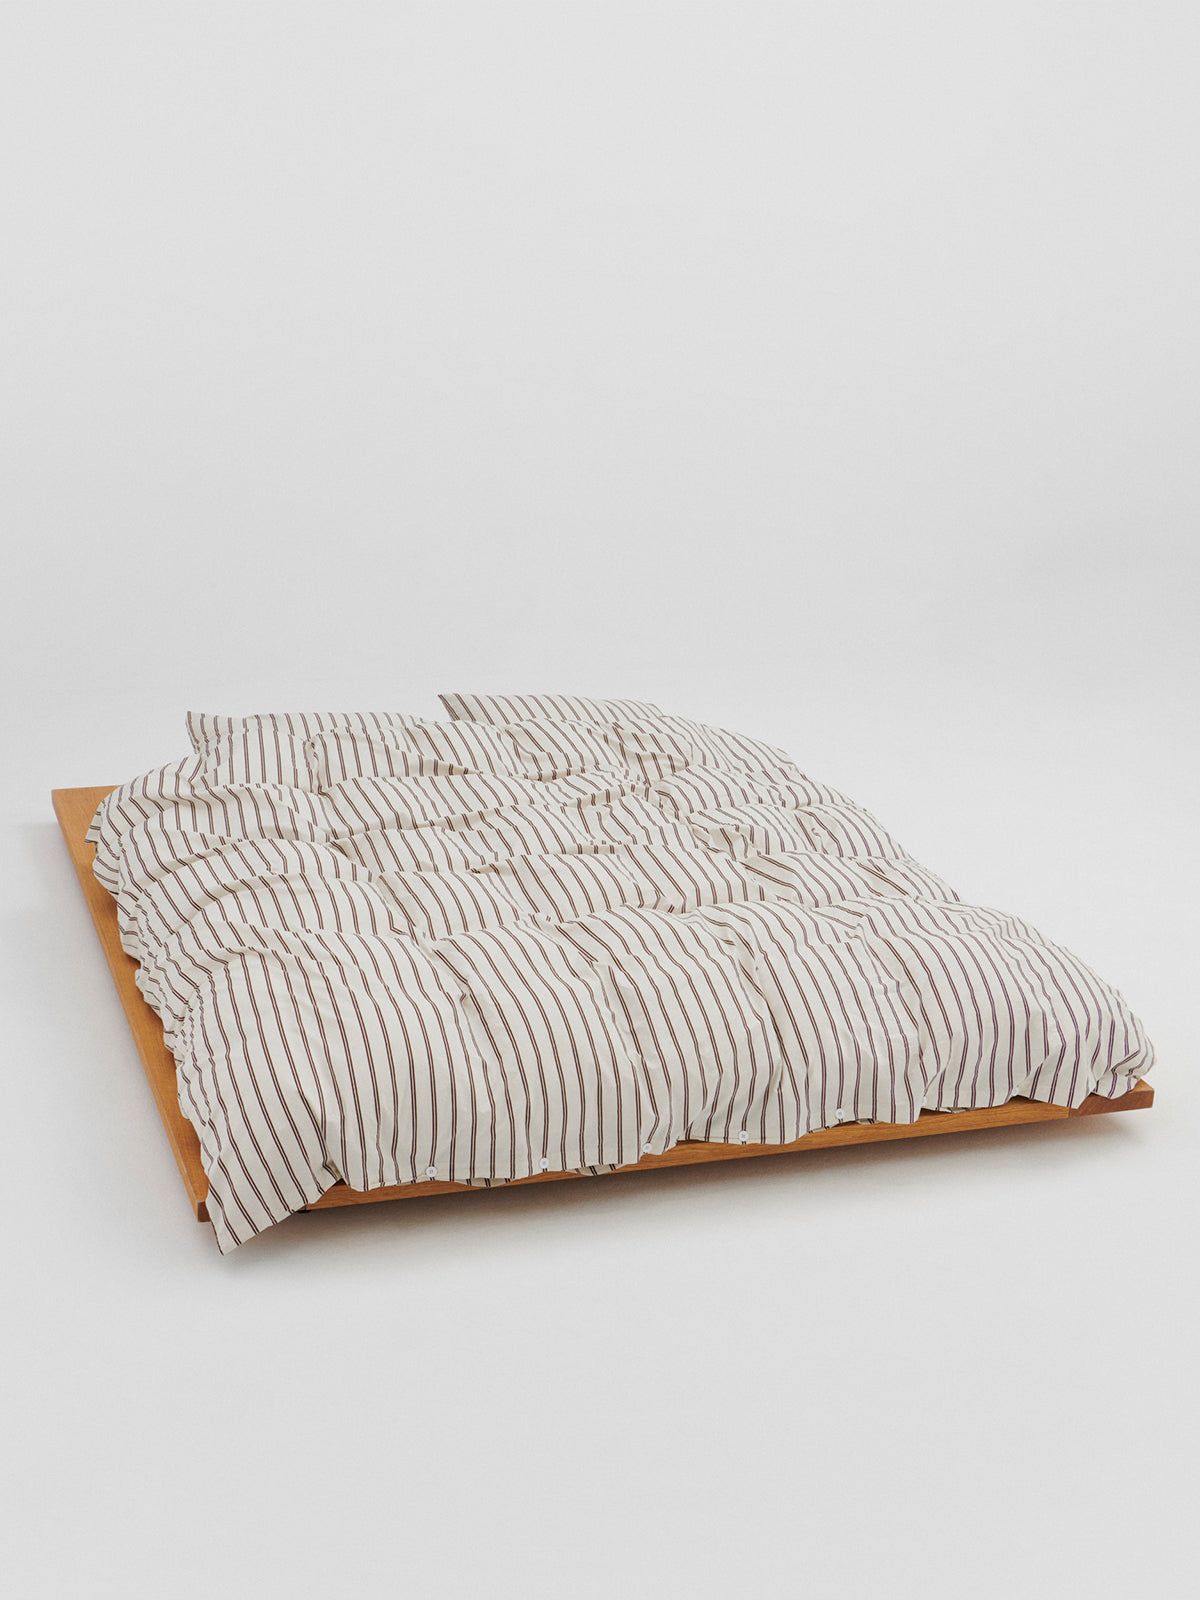 Percale Duvet Cover in Hopper Stripes